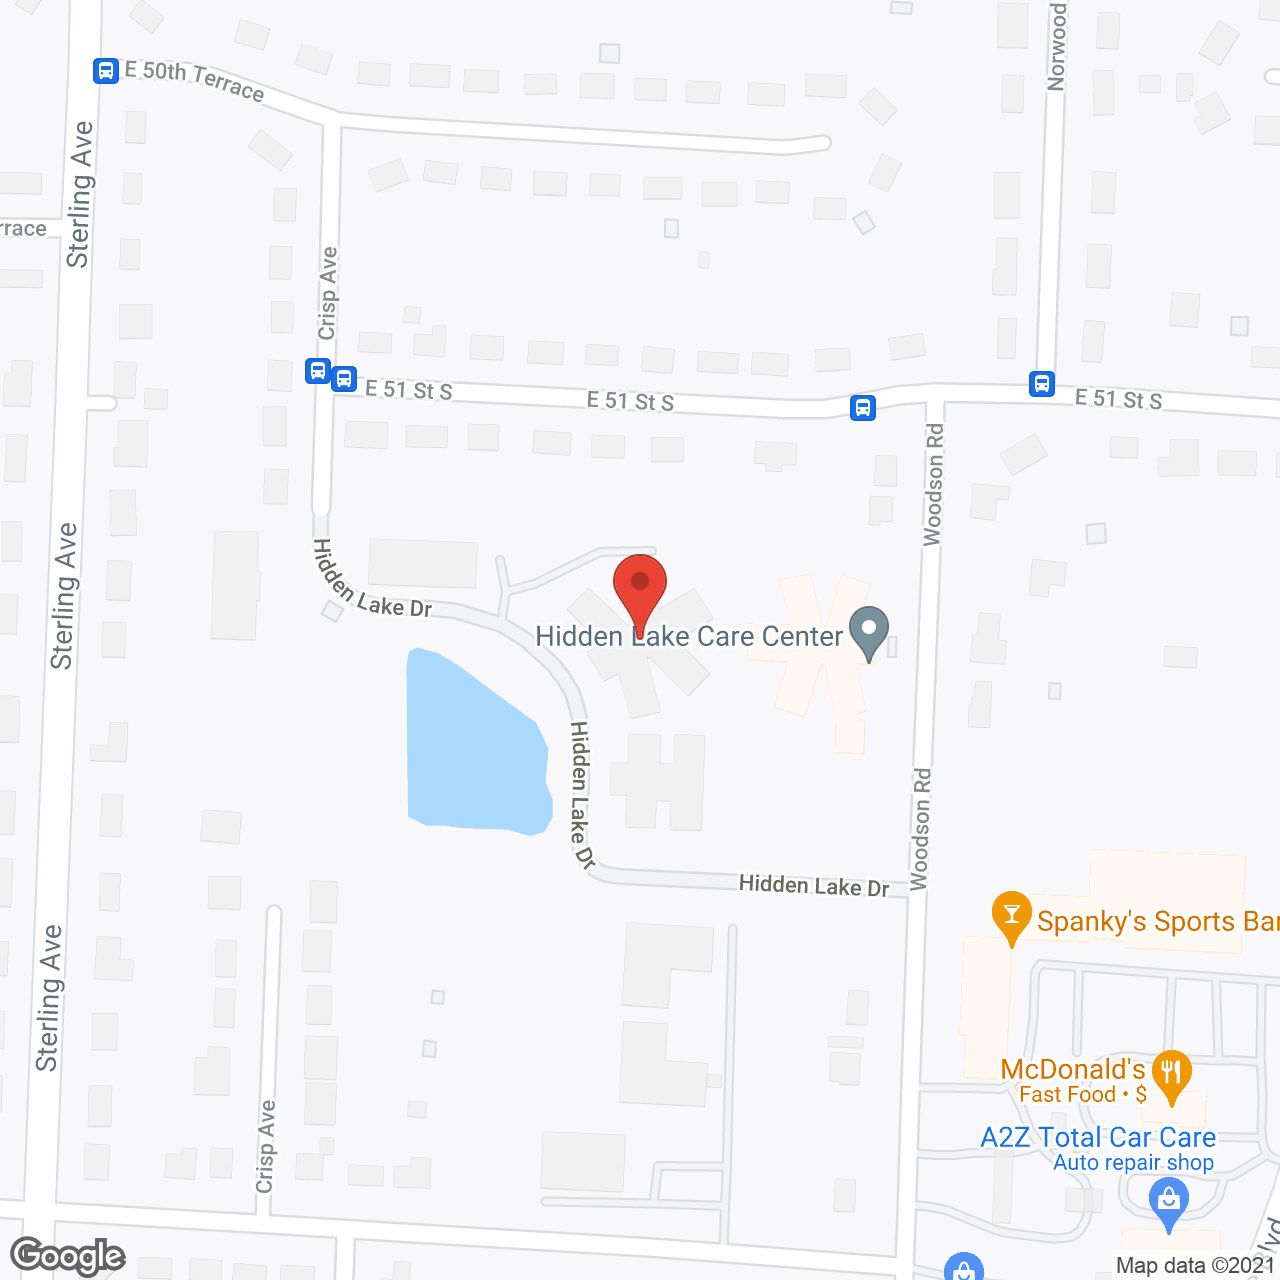 Hidden Lake Care Center in google map